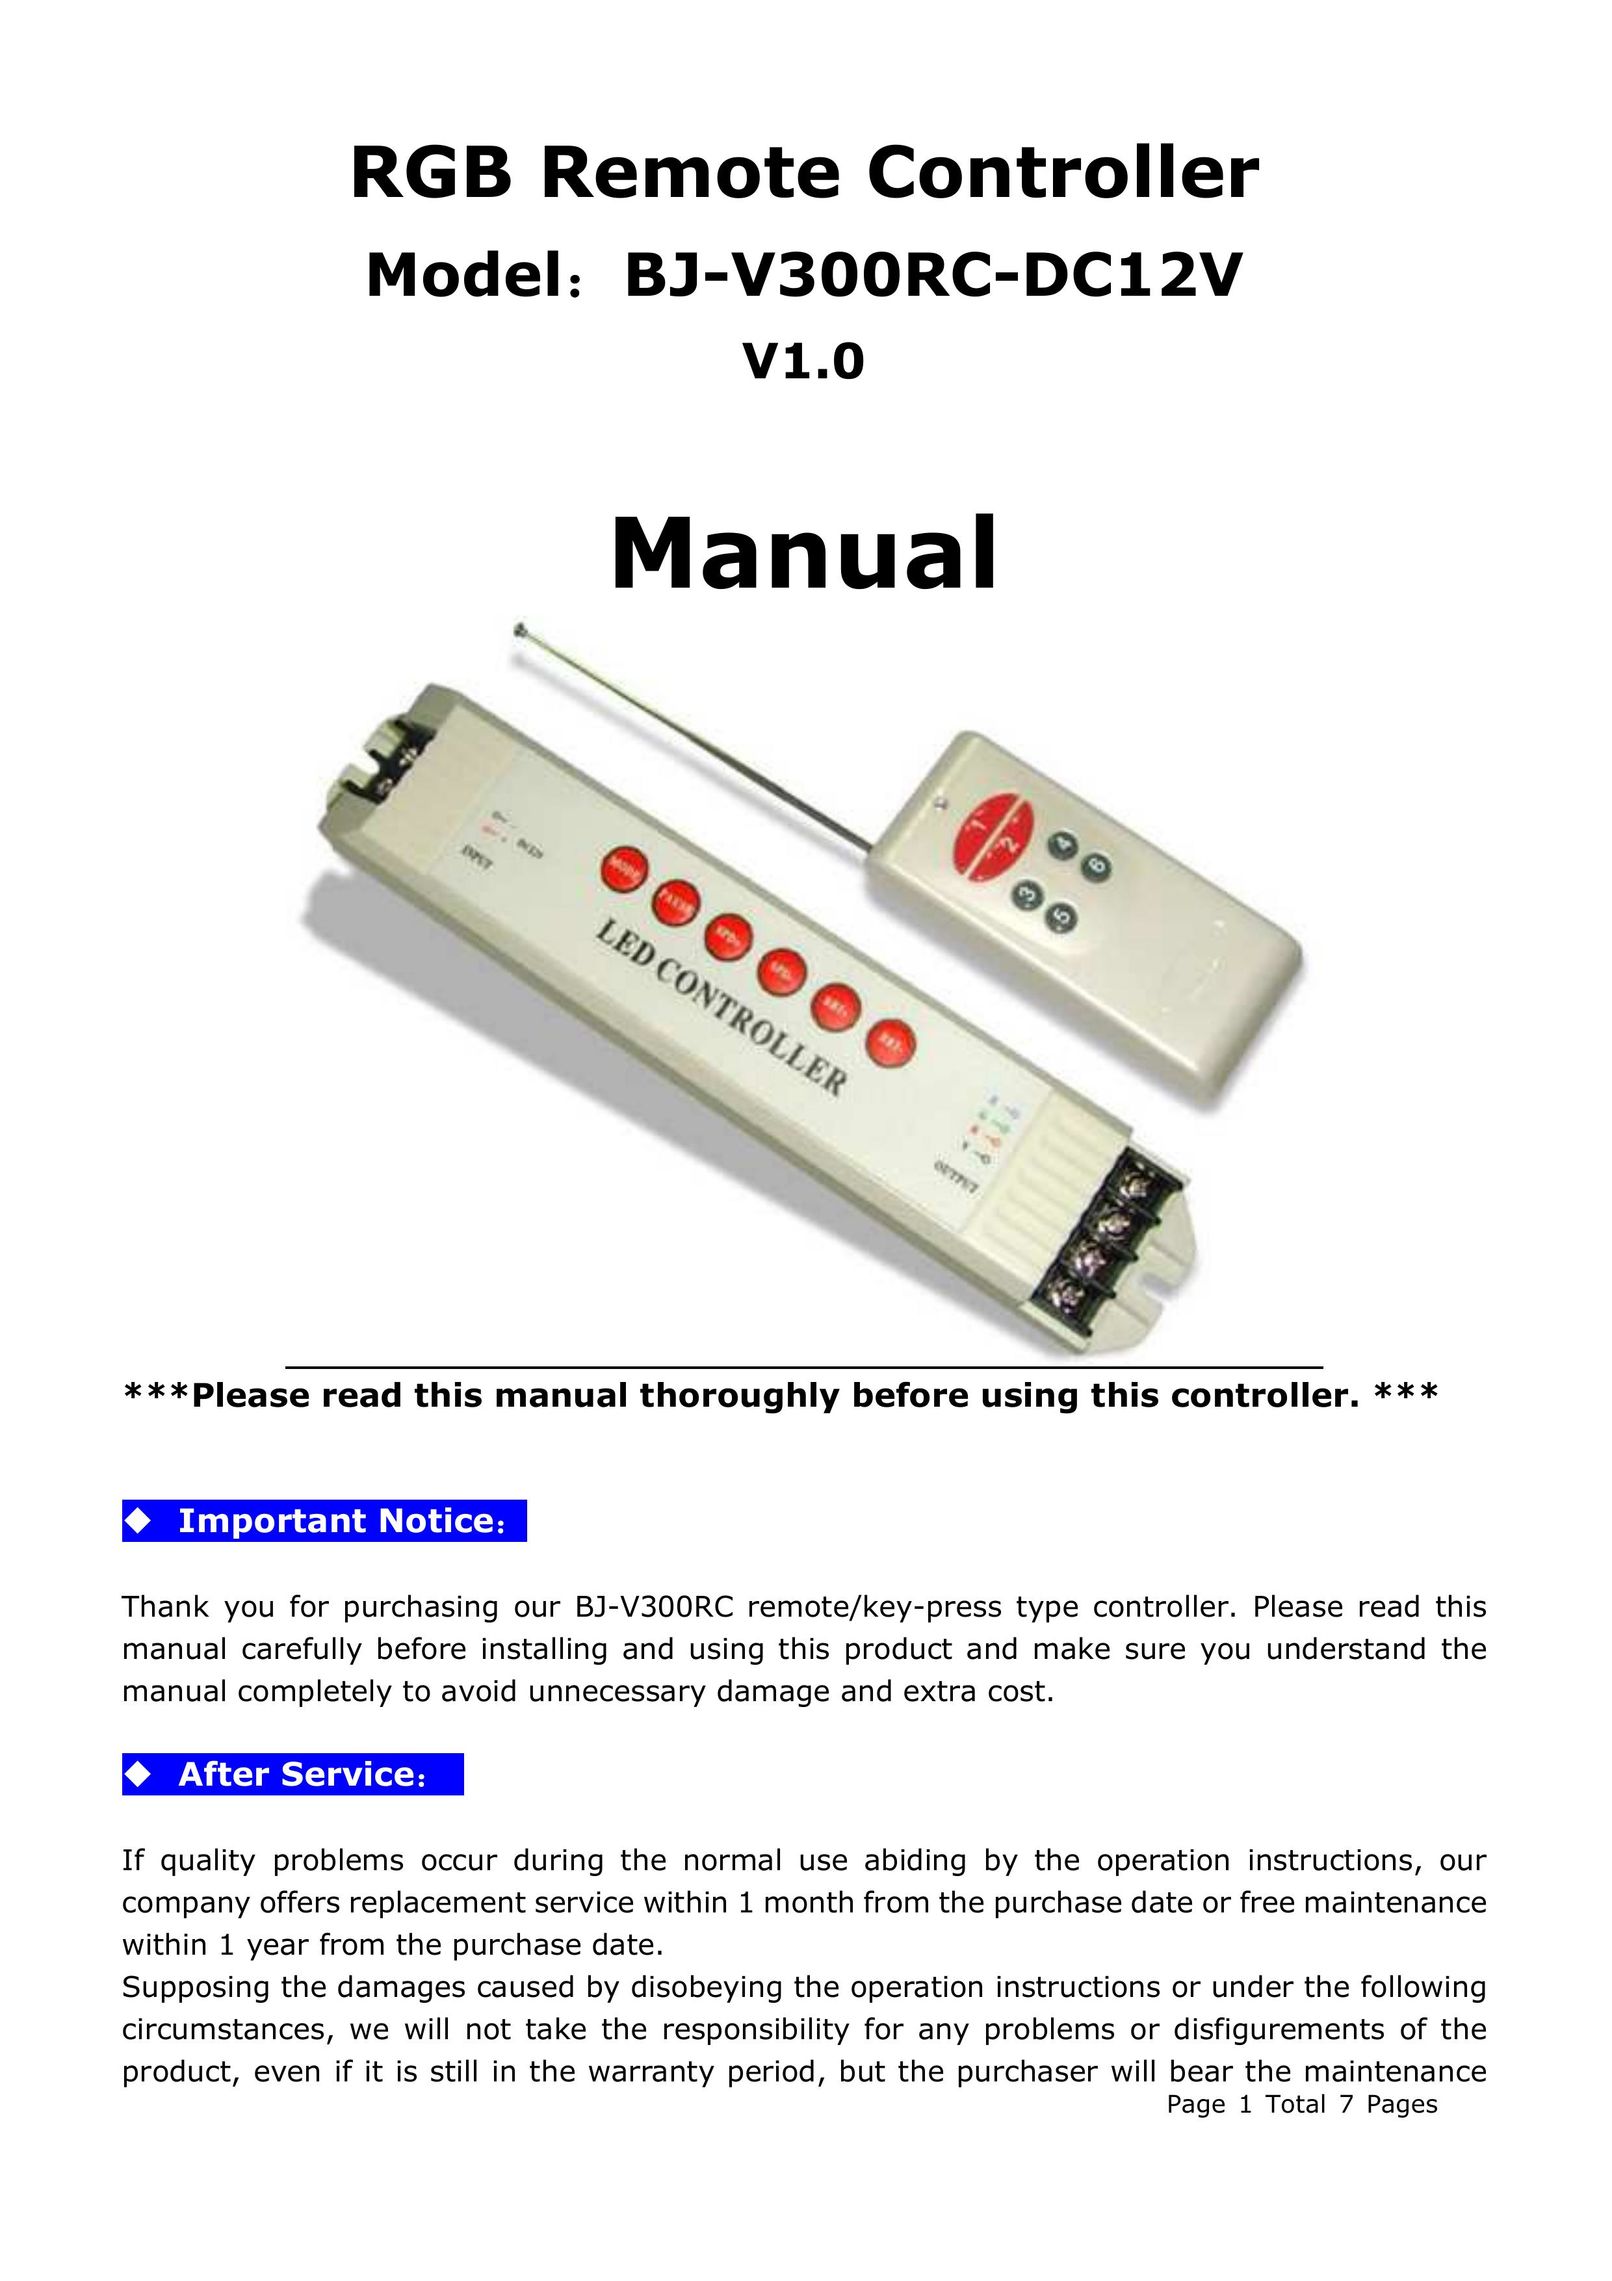 RGB Spectrum BJ-V300RC-DC12V Home Theater Server User Manual